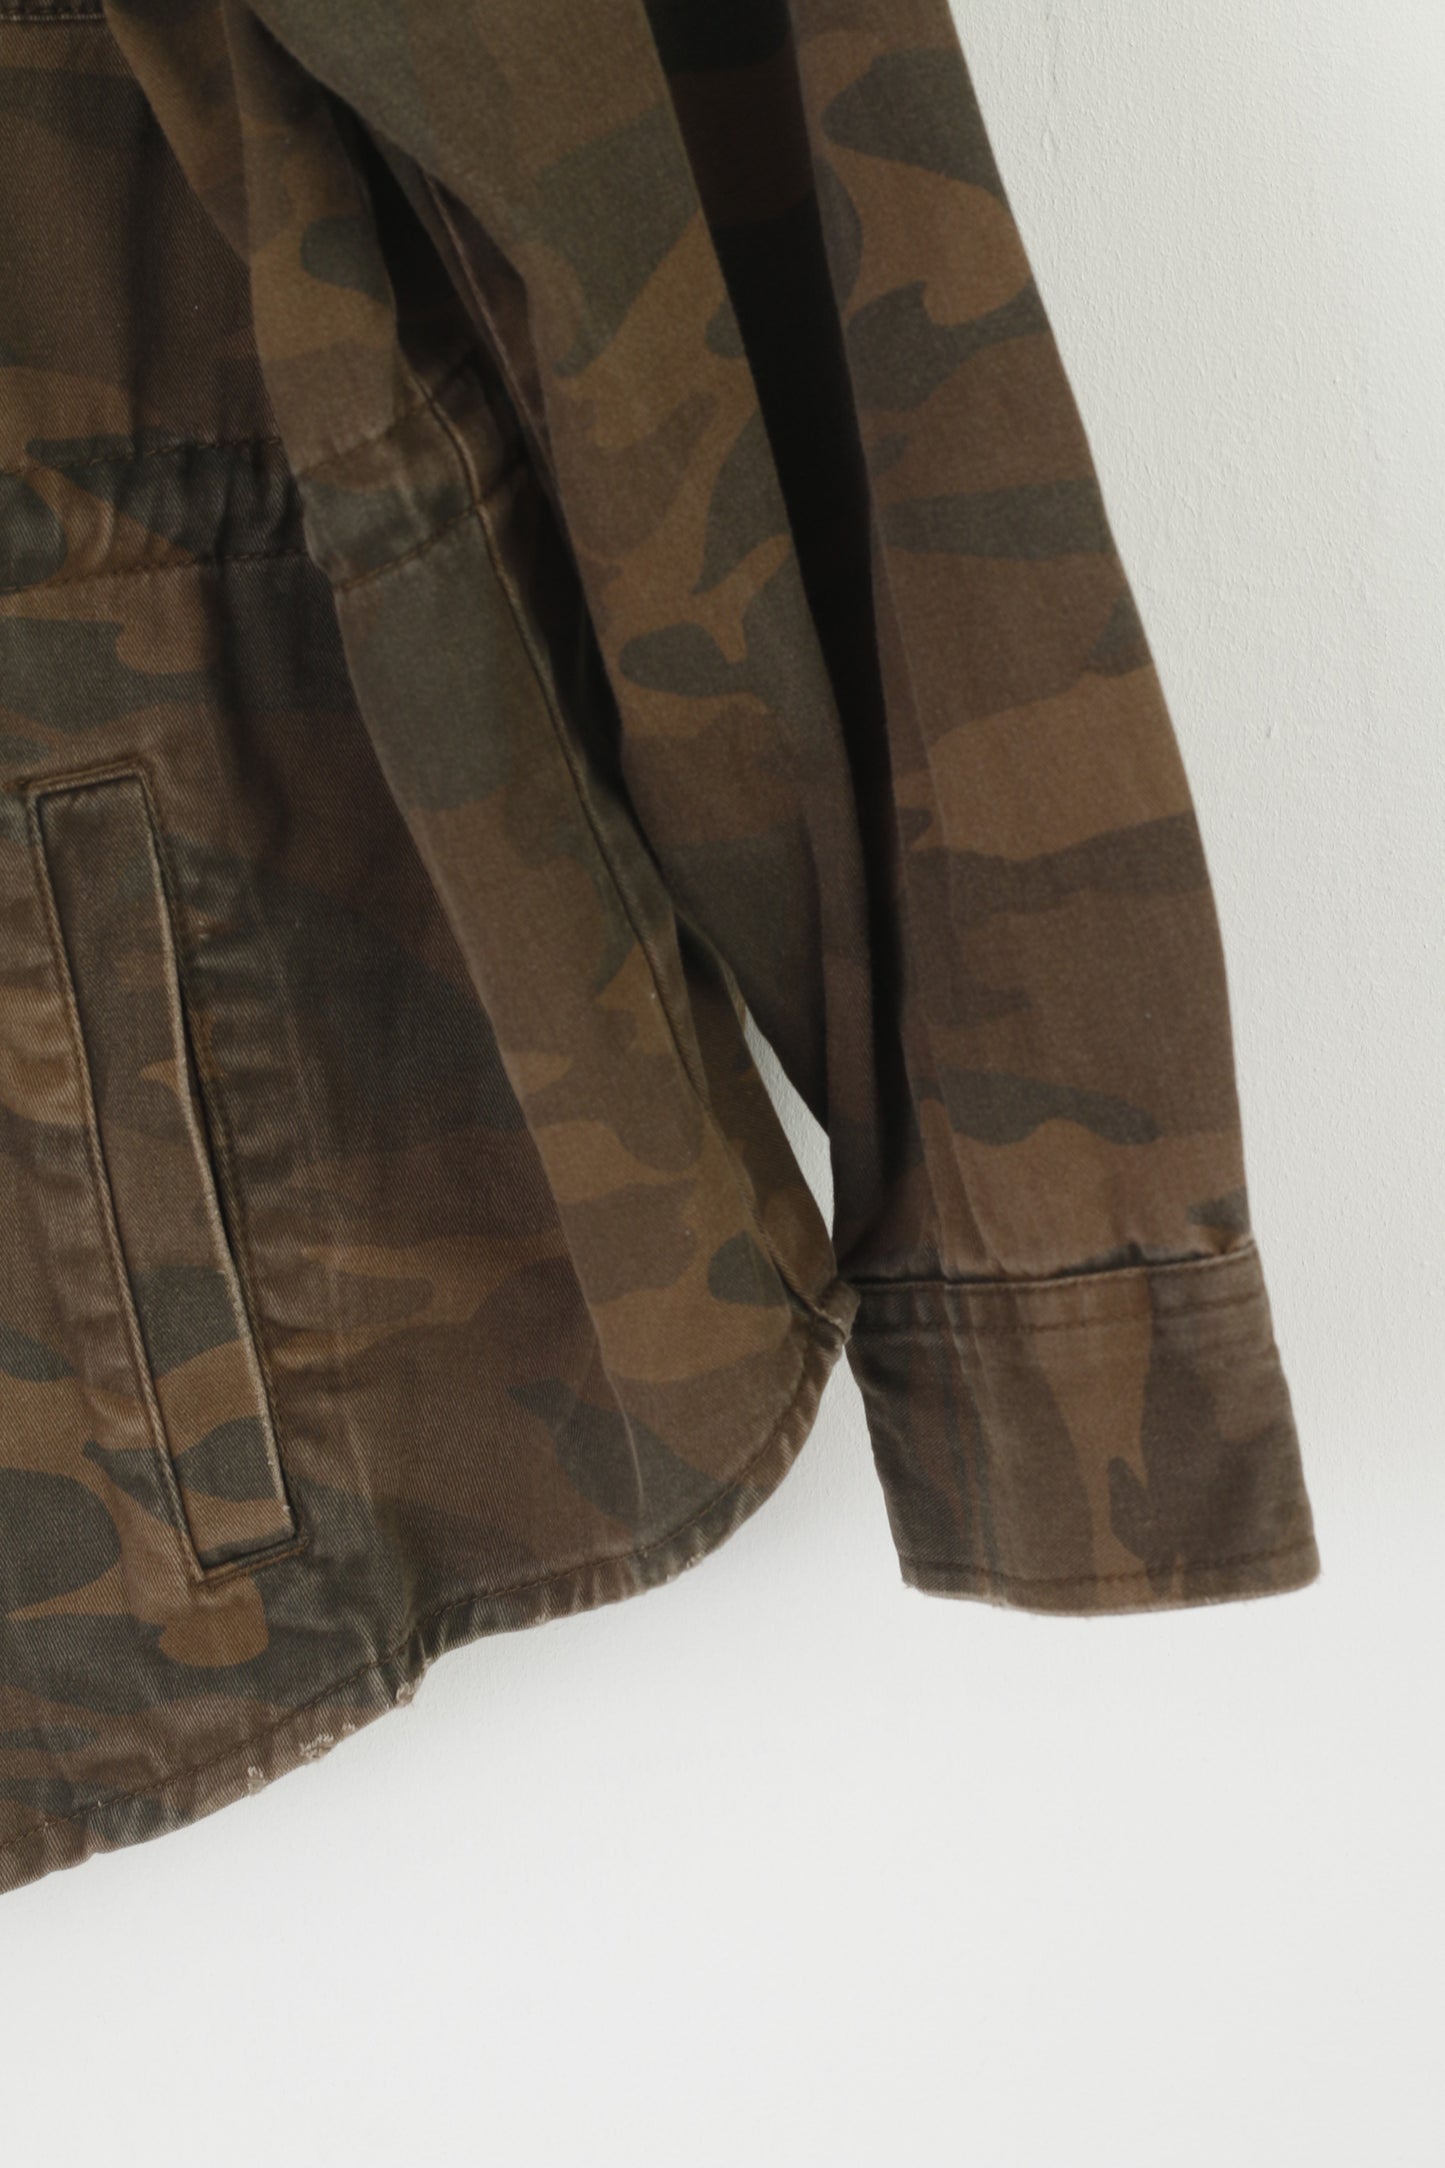 Next Outerwear Women 22 XL Jacket Brown Camuflage Military Full Zipper Combat Top